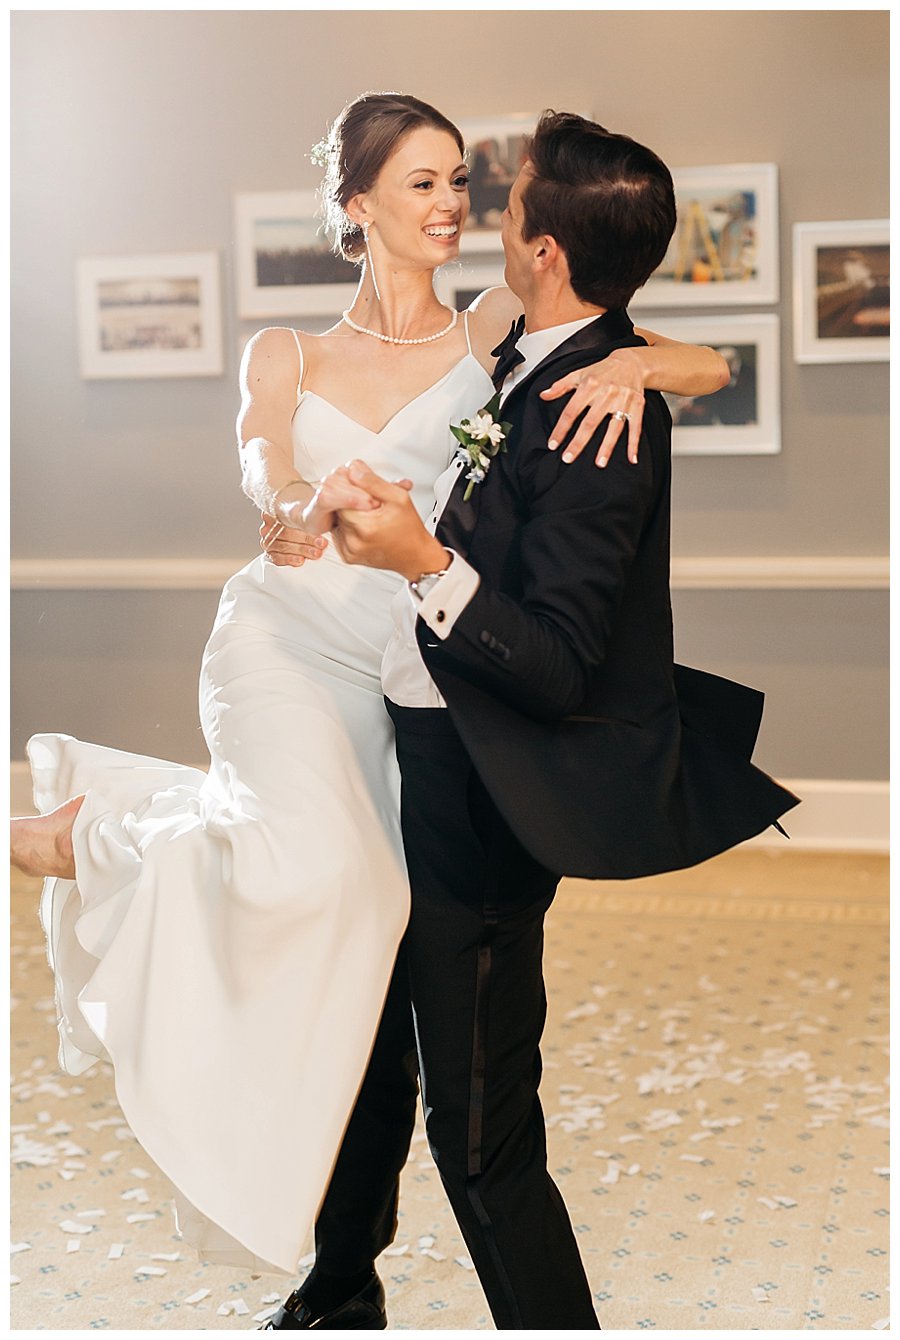 Nashville wedding photographer, schermerhorn symphony wedding, nashville wedding photography, classic elegant wedding, black tie wedding nashville,